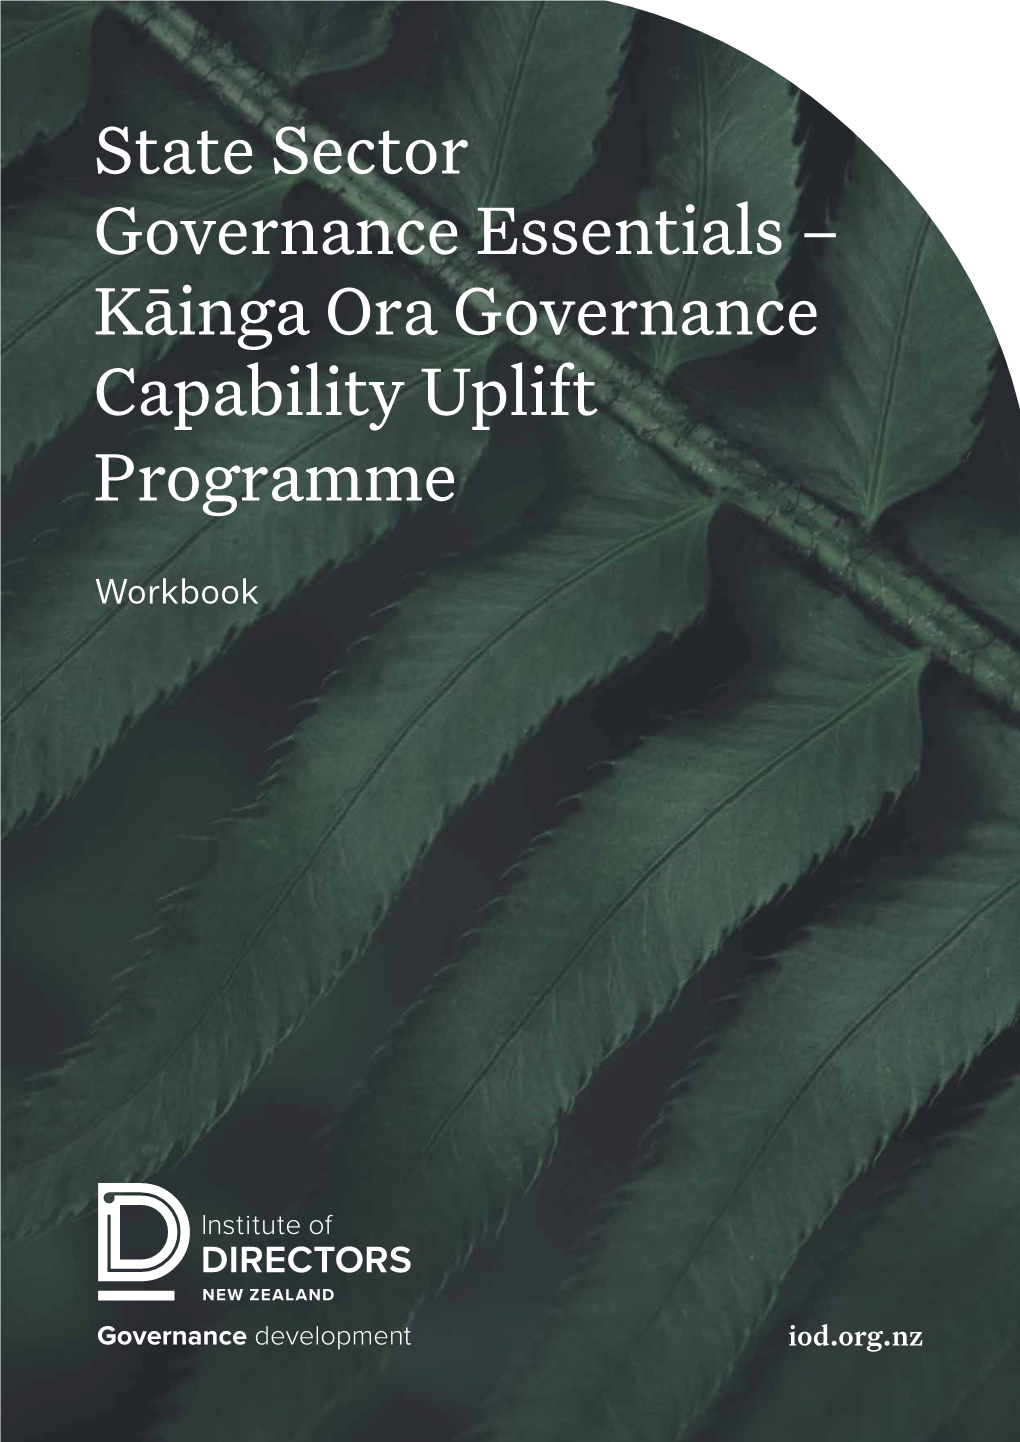 Kāinga Ora Governance Capability Uplift Programme